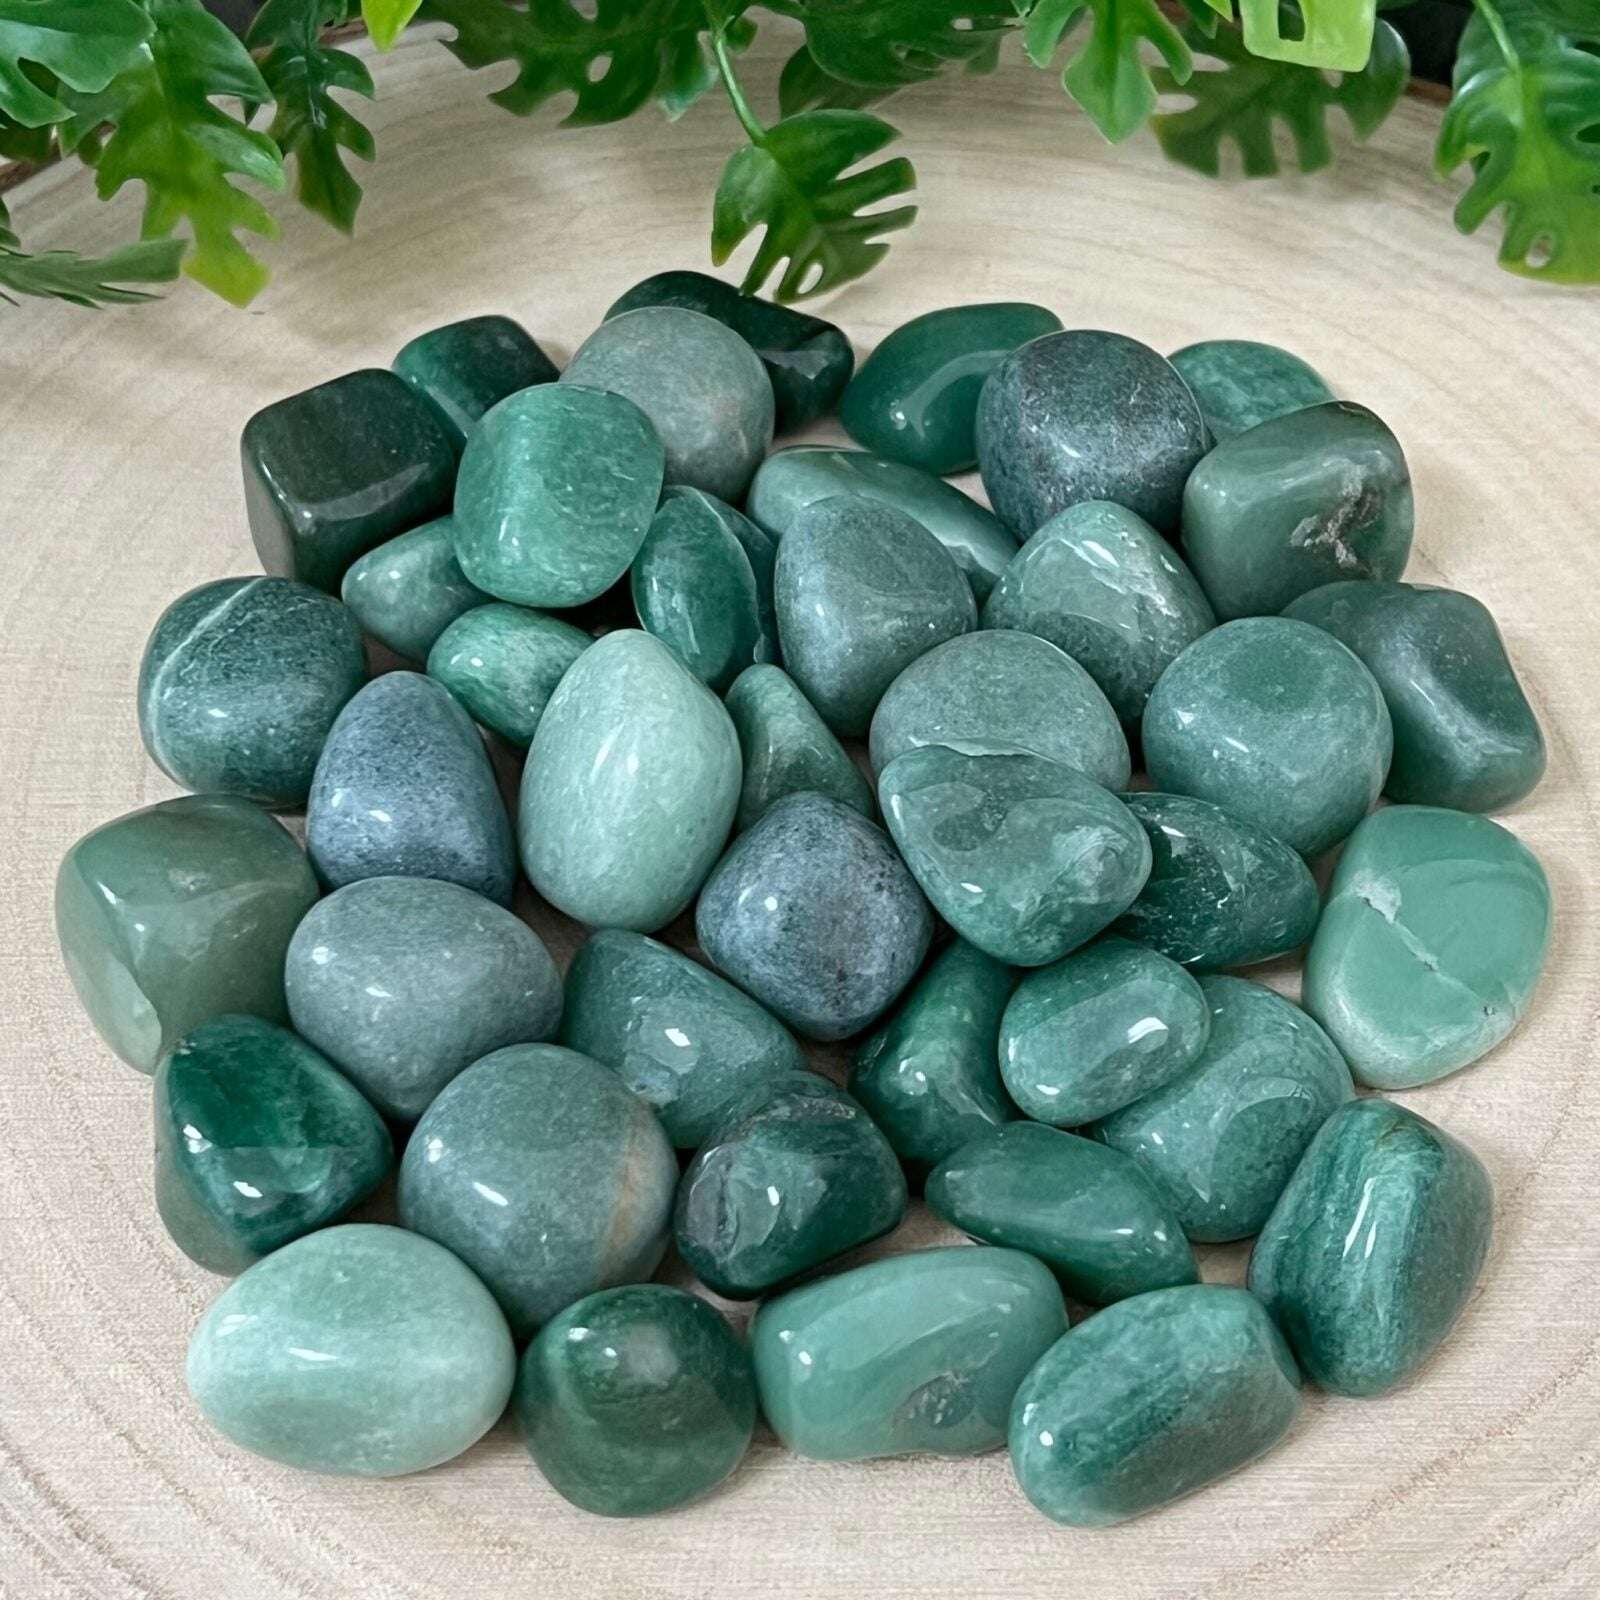 Green Aventurine tumbled stones